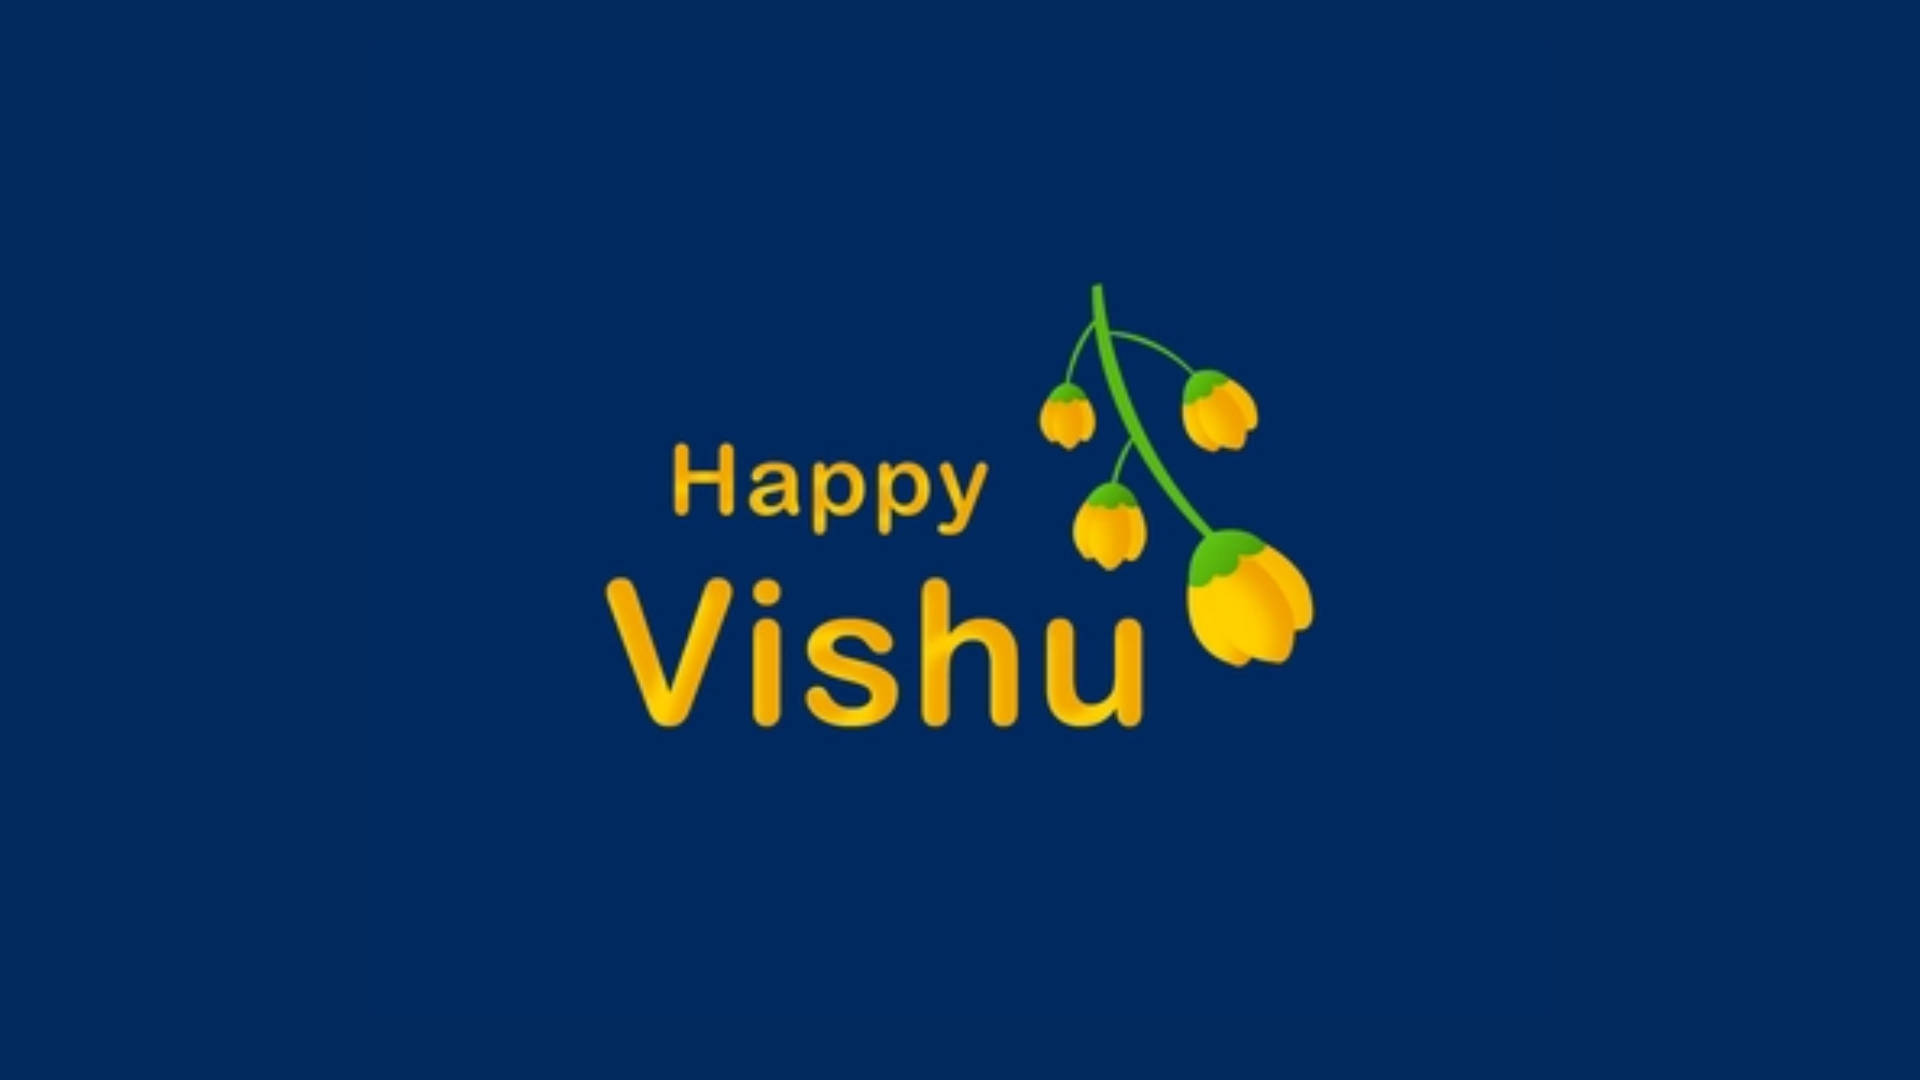 Happy Vishu Greeting On Deep Indigo Blue Background Wallpaper